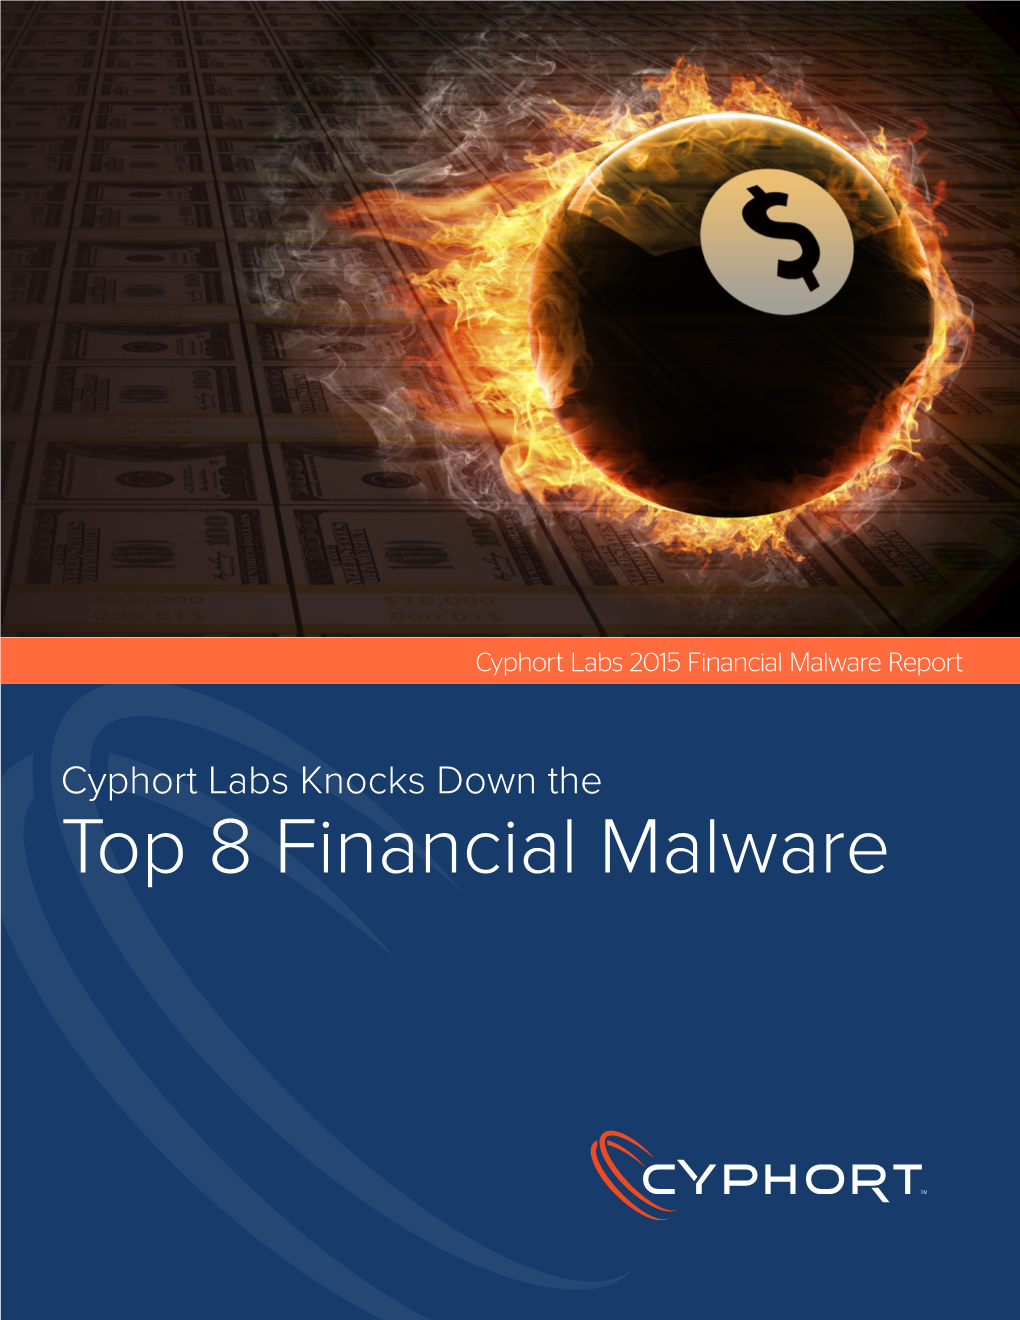 Top 8 Financial Malware